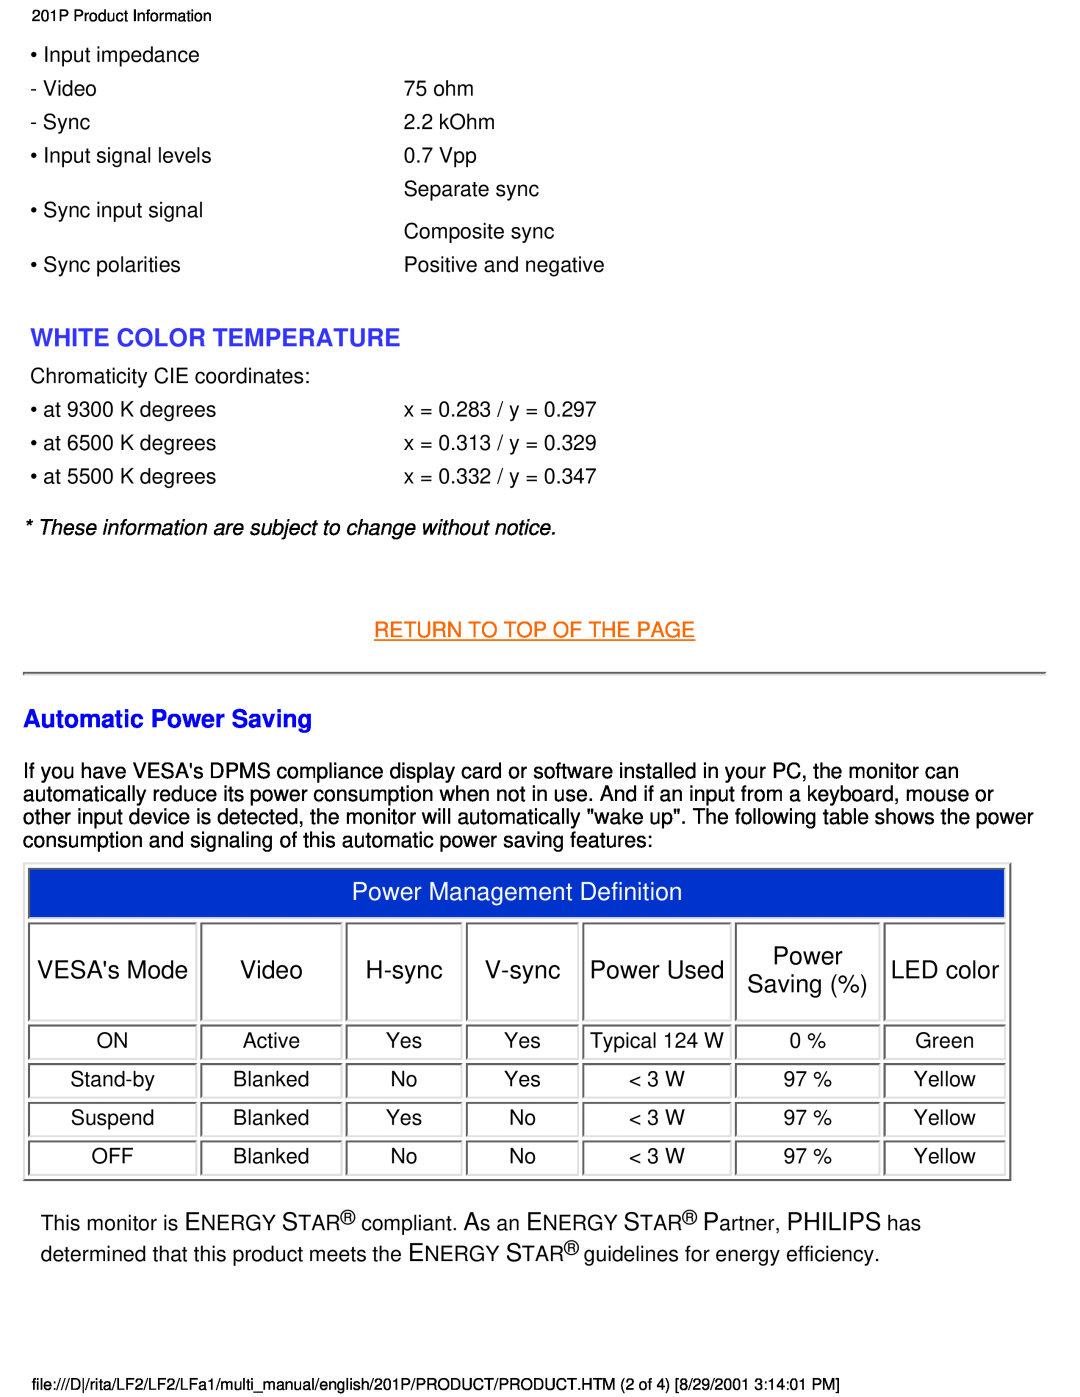 Philips 201P White Color Temperature, Automatic Power Saving, Power Management Definition, VESAs Mode, Video, V-sync 